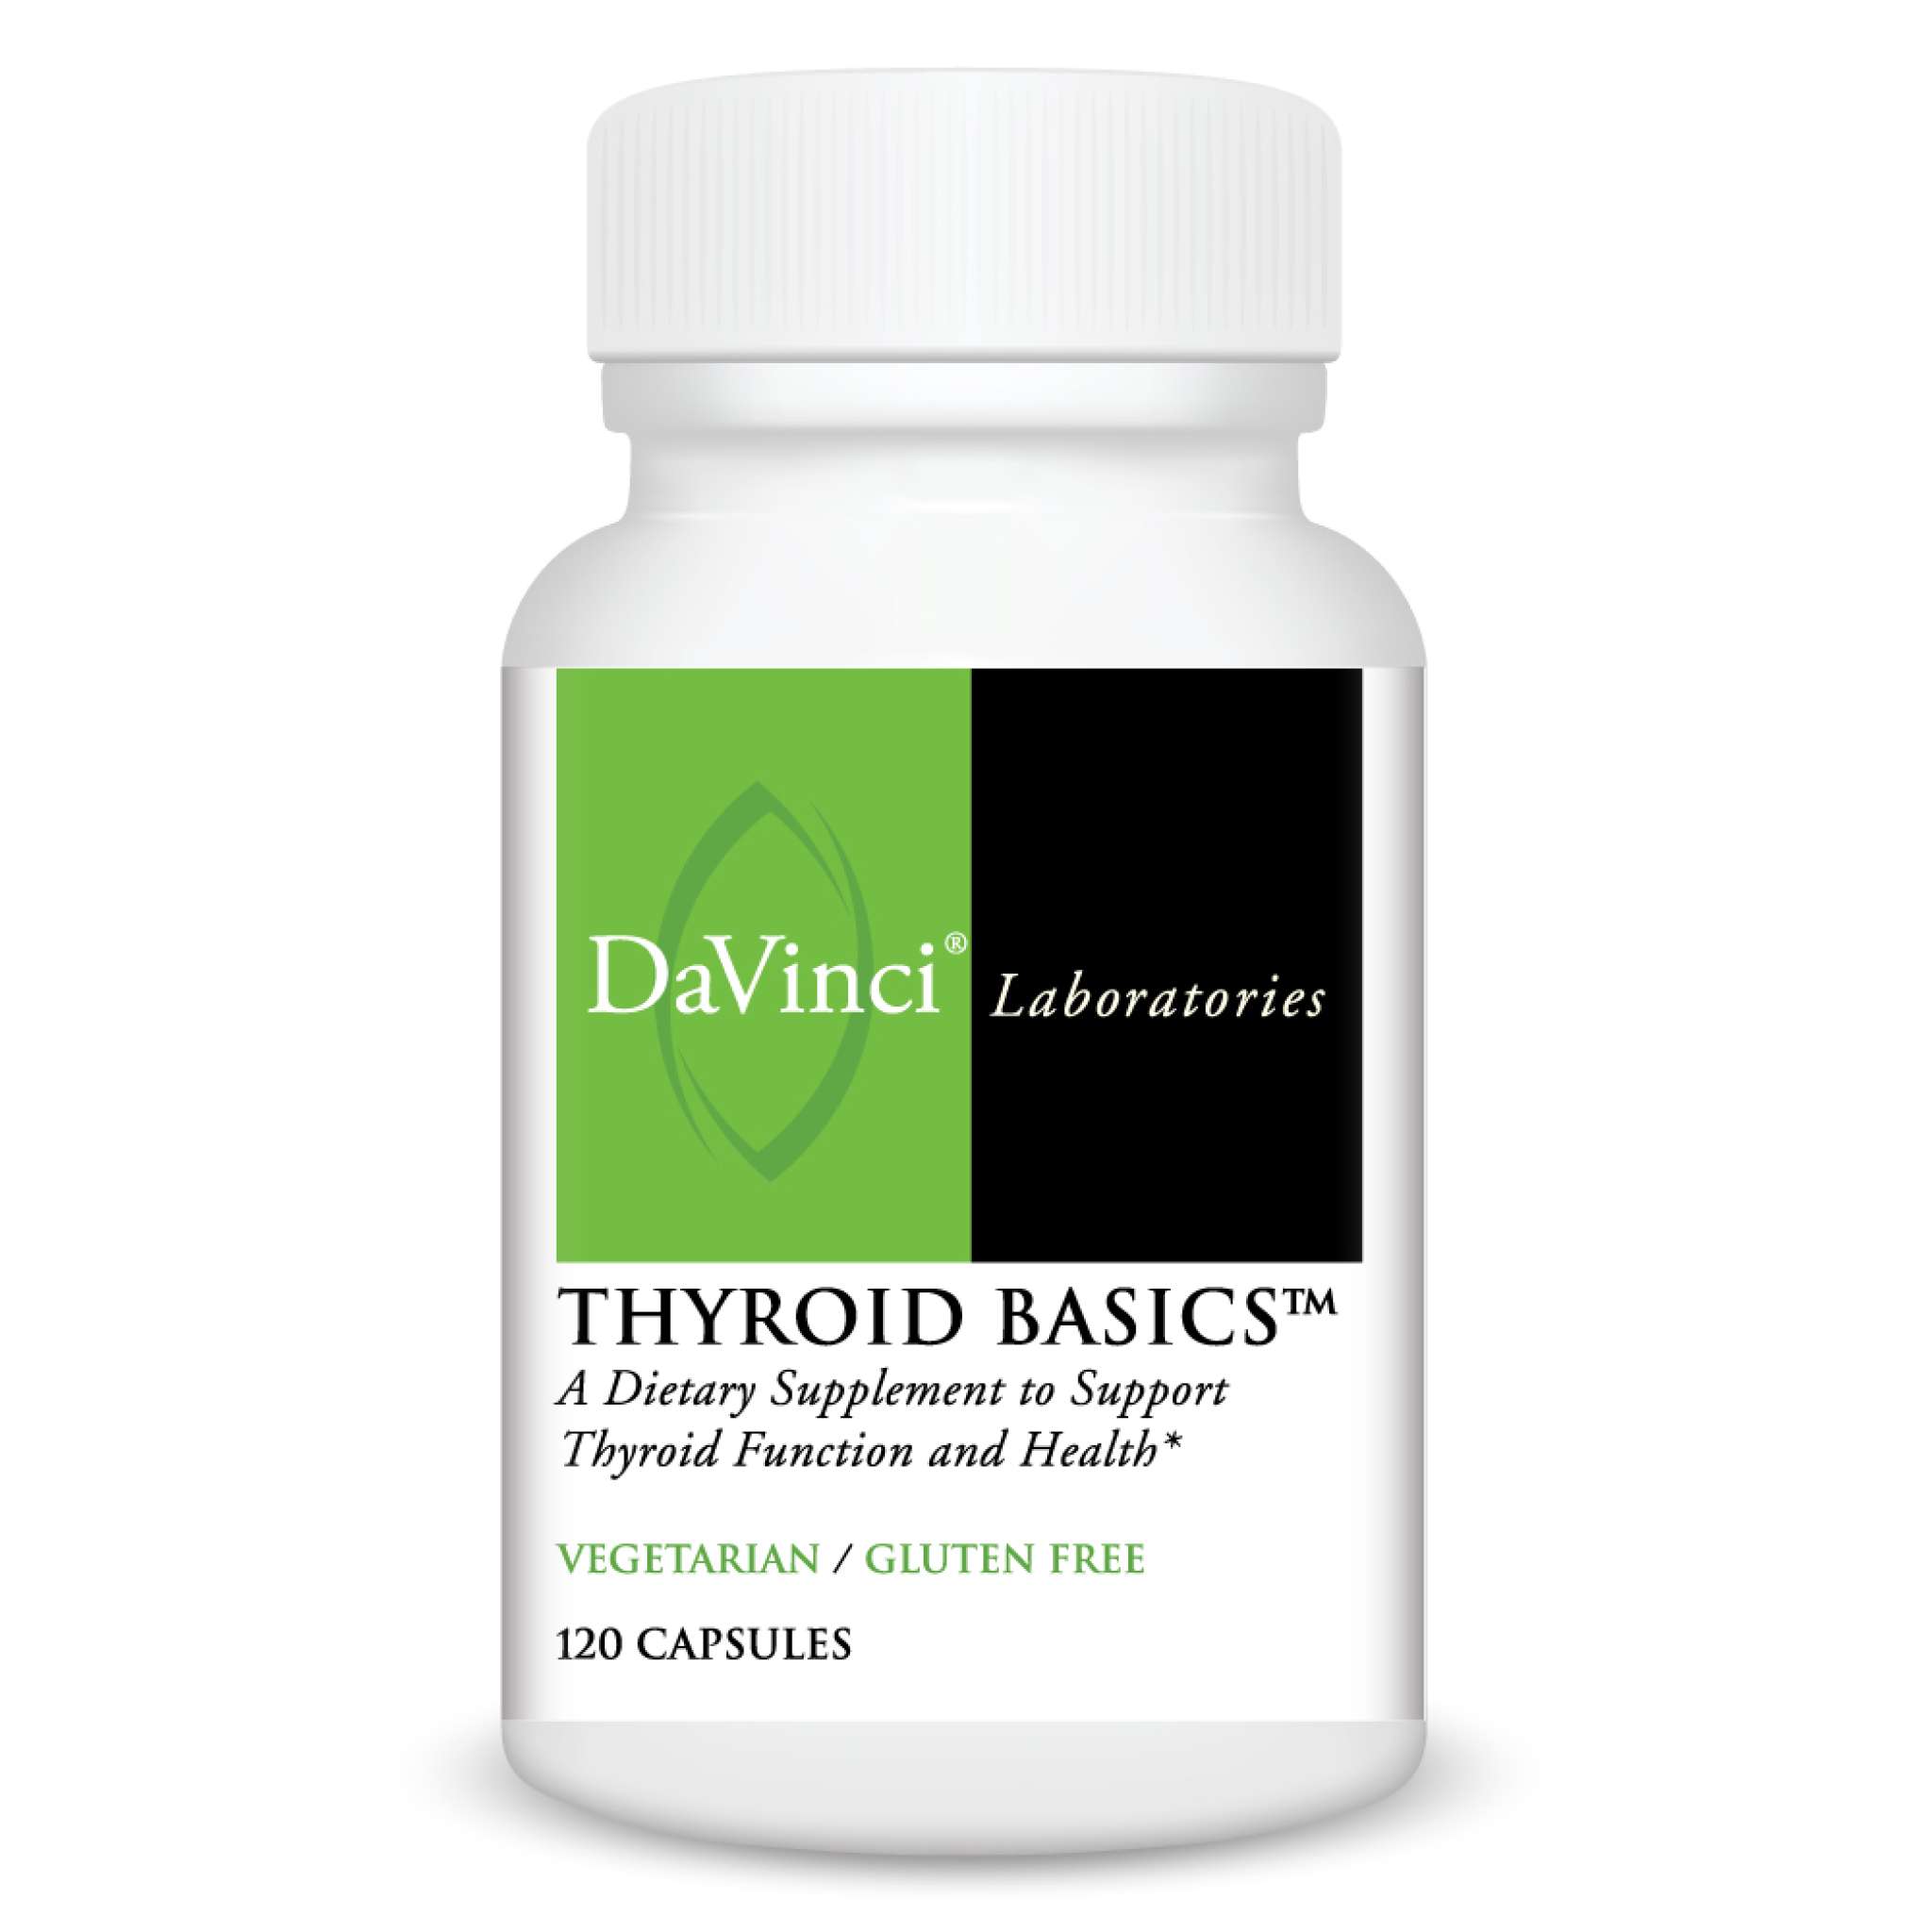 Davinci Laboratories - Thyroid Basics